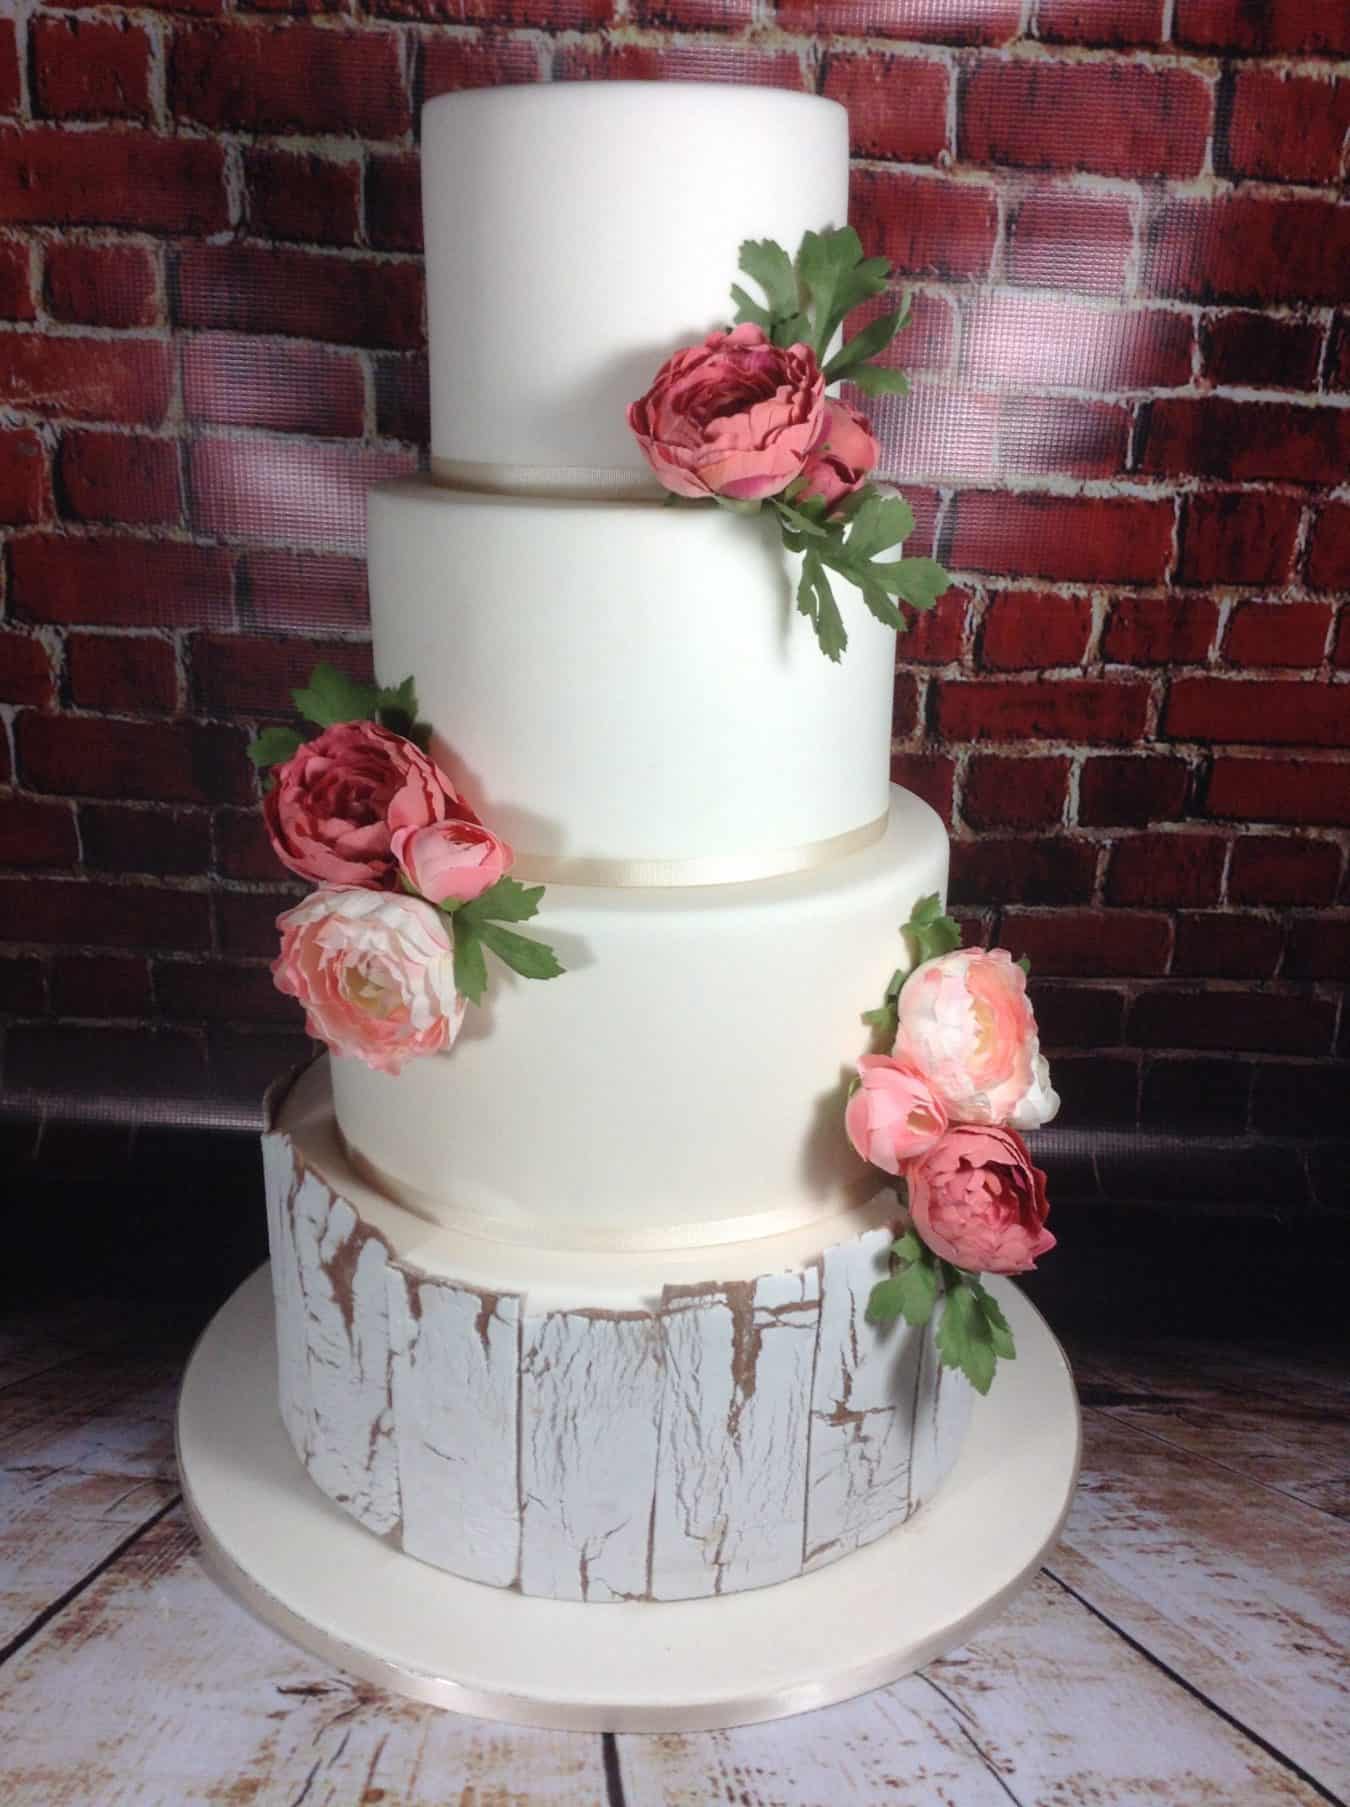 scottish-edinburgh-wedding-cakes-the-little-cake-house-pink-rose